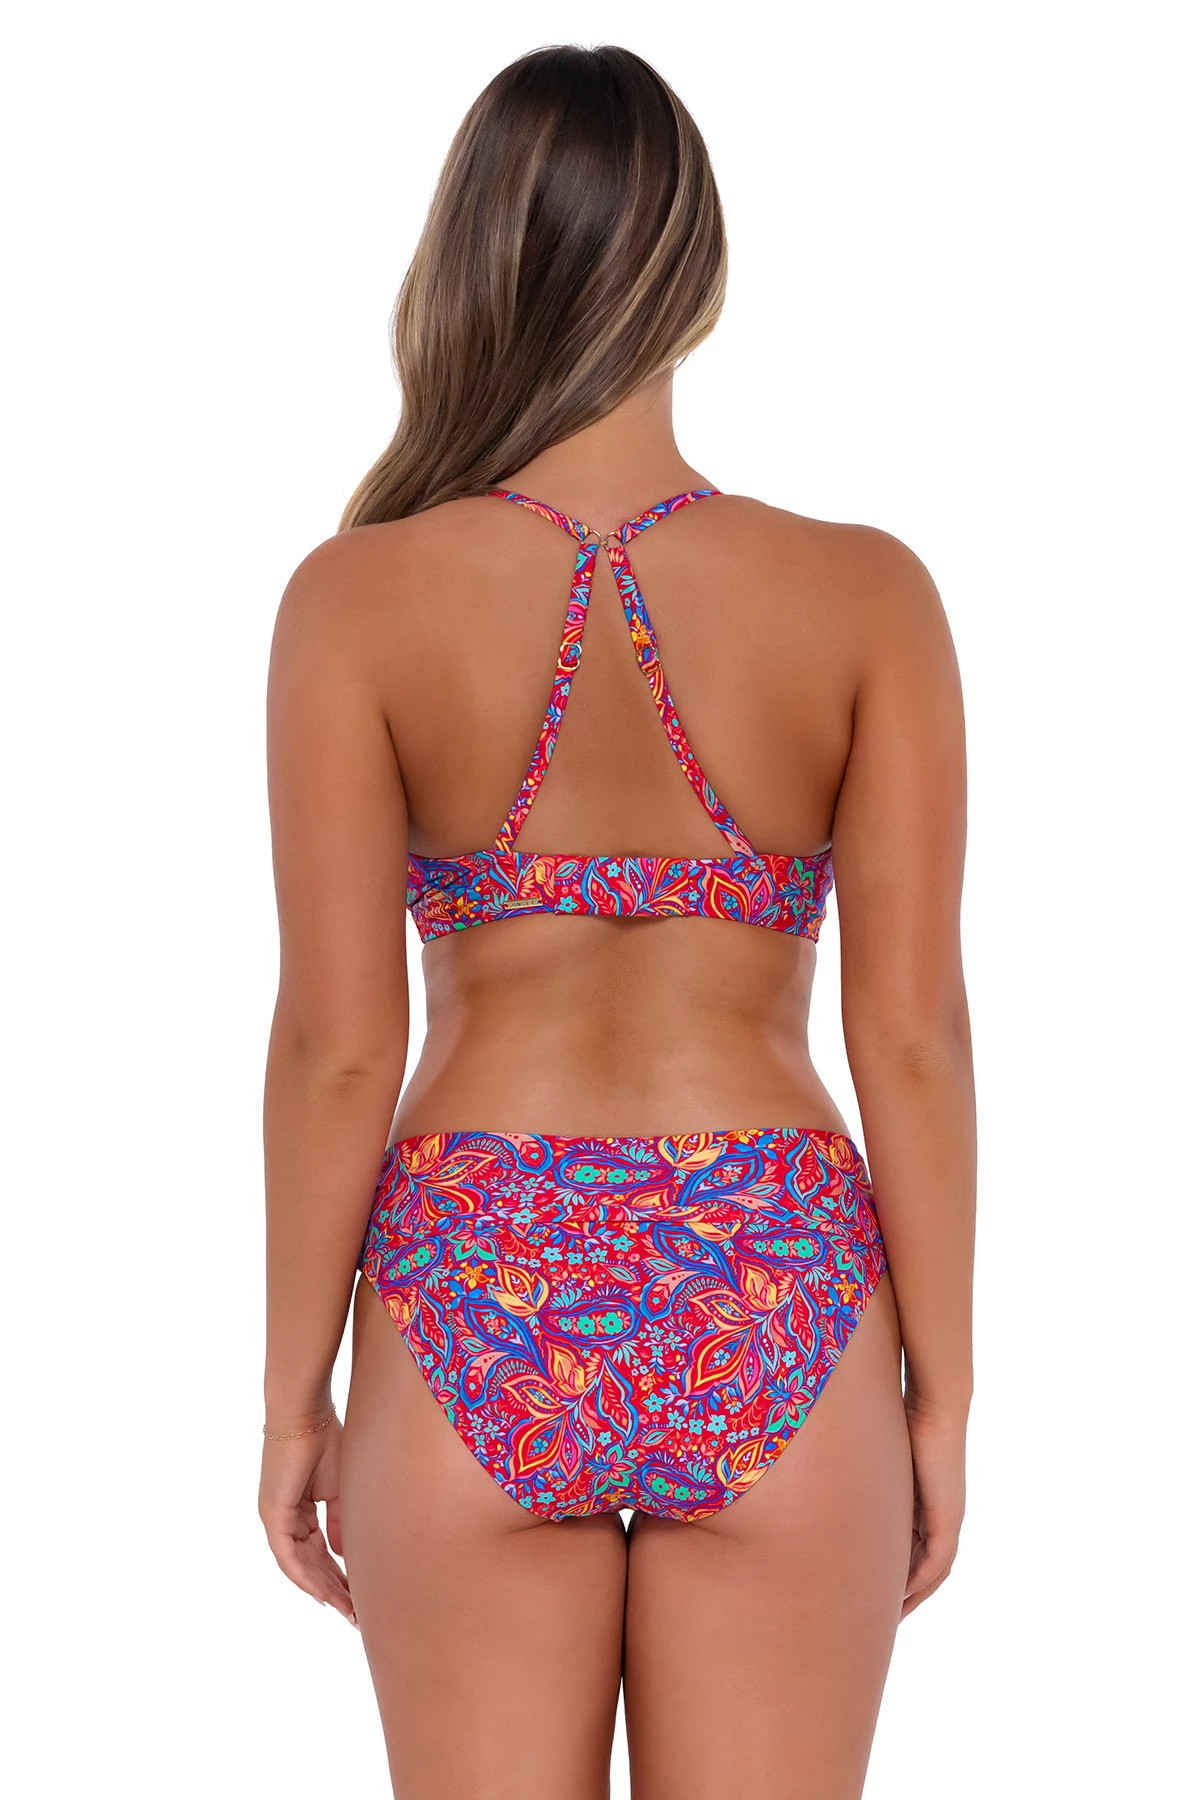 RUE PAISLEY Kauai Keyhole Bralette Bikini Top (D+ Cup) image number 3